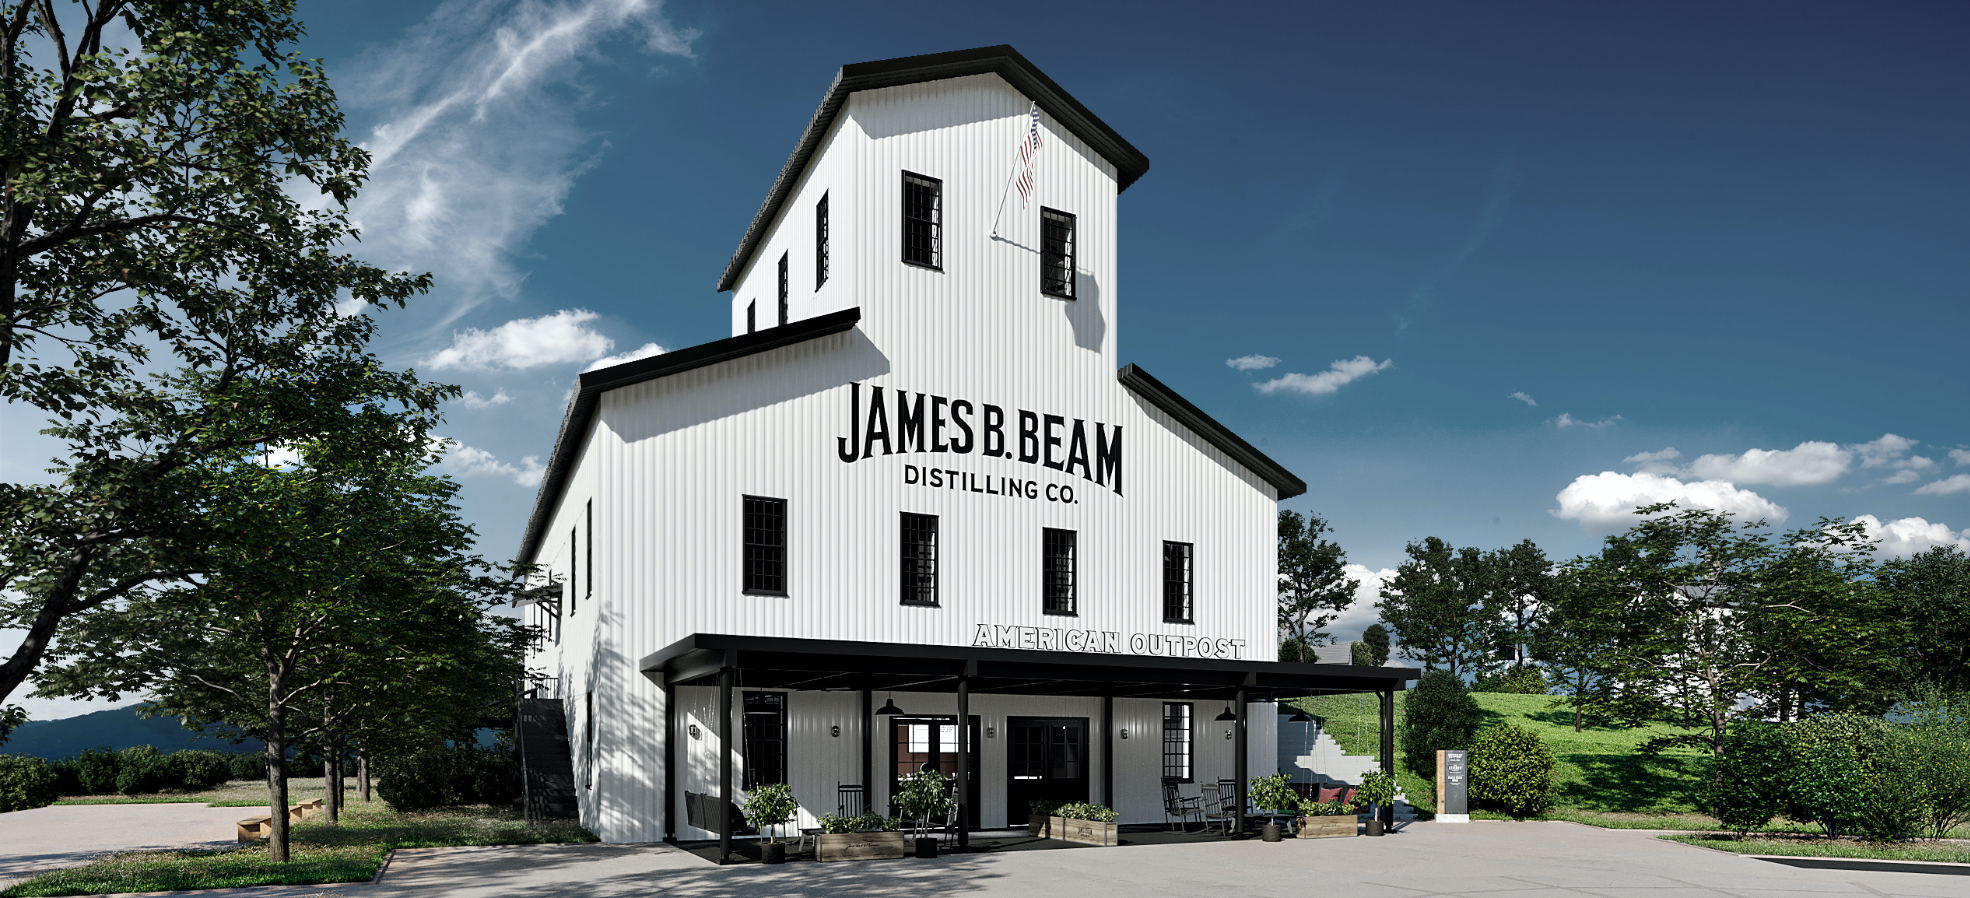 James B. Beam Distilling Co in Kentucky